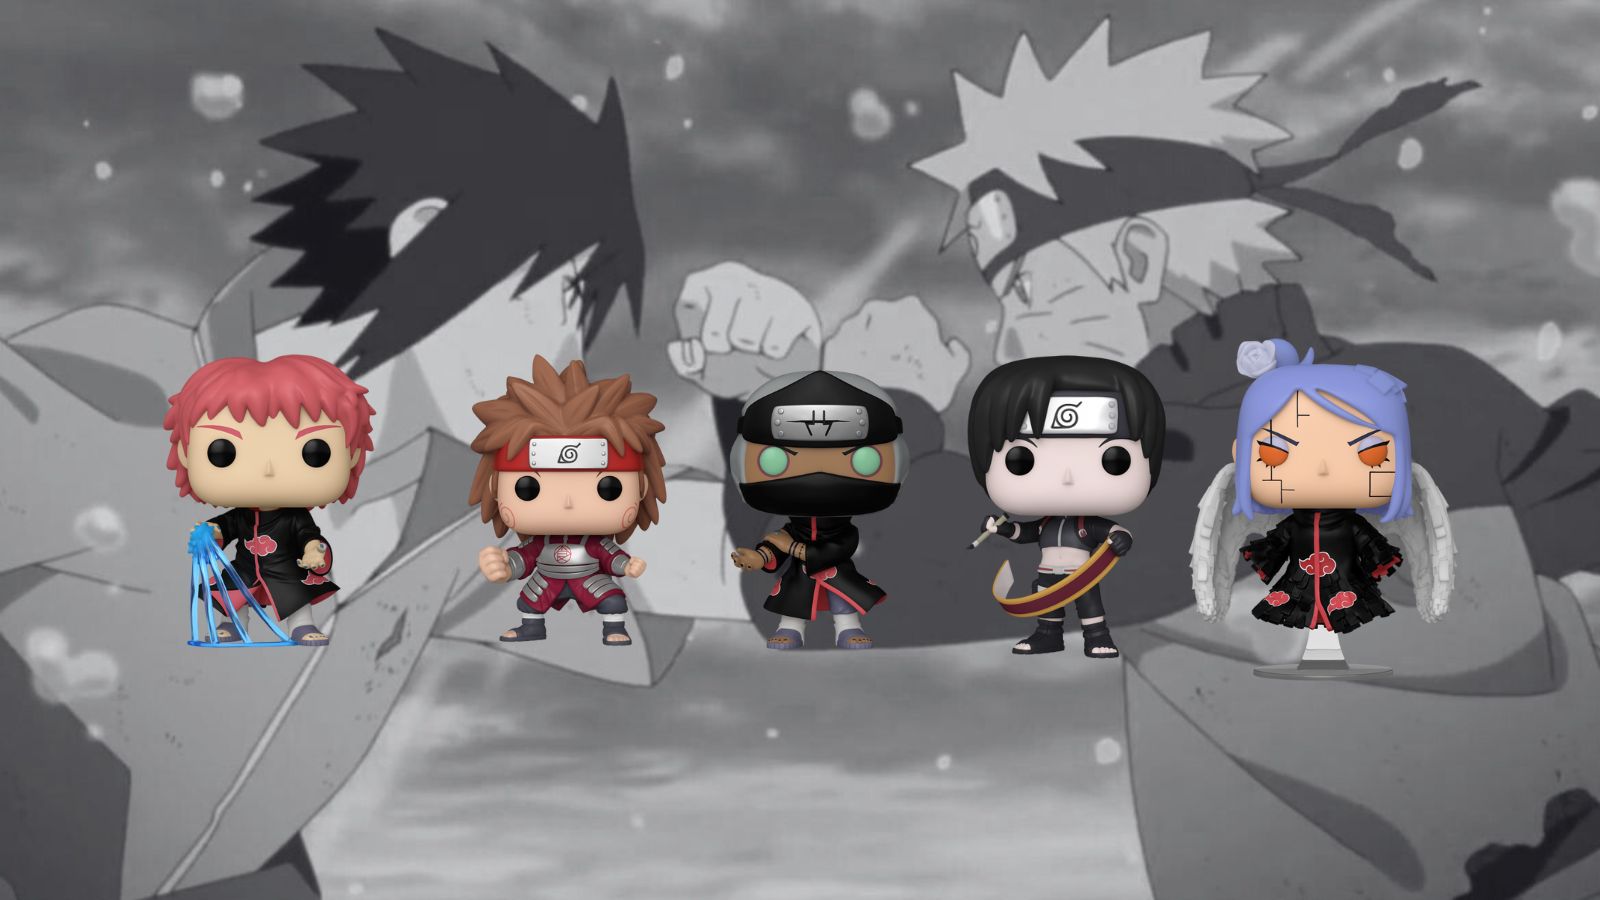 Naruto: Shisui's Mangekyou Sharingan explained - Dexerto